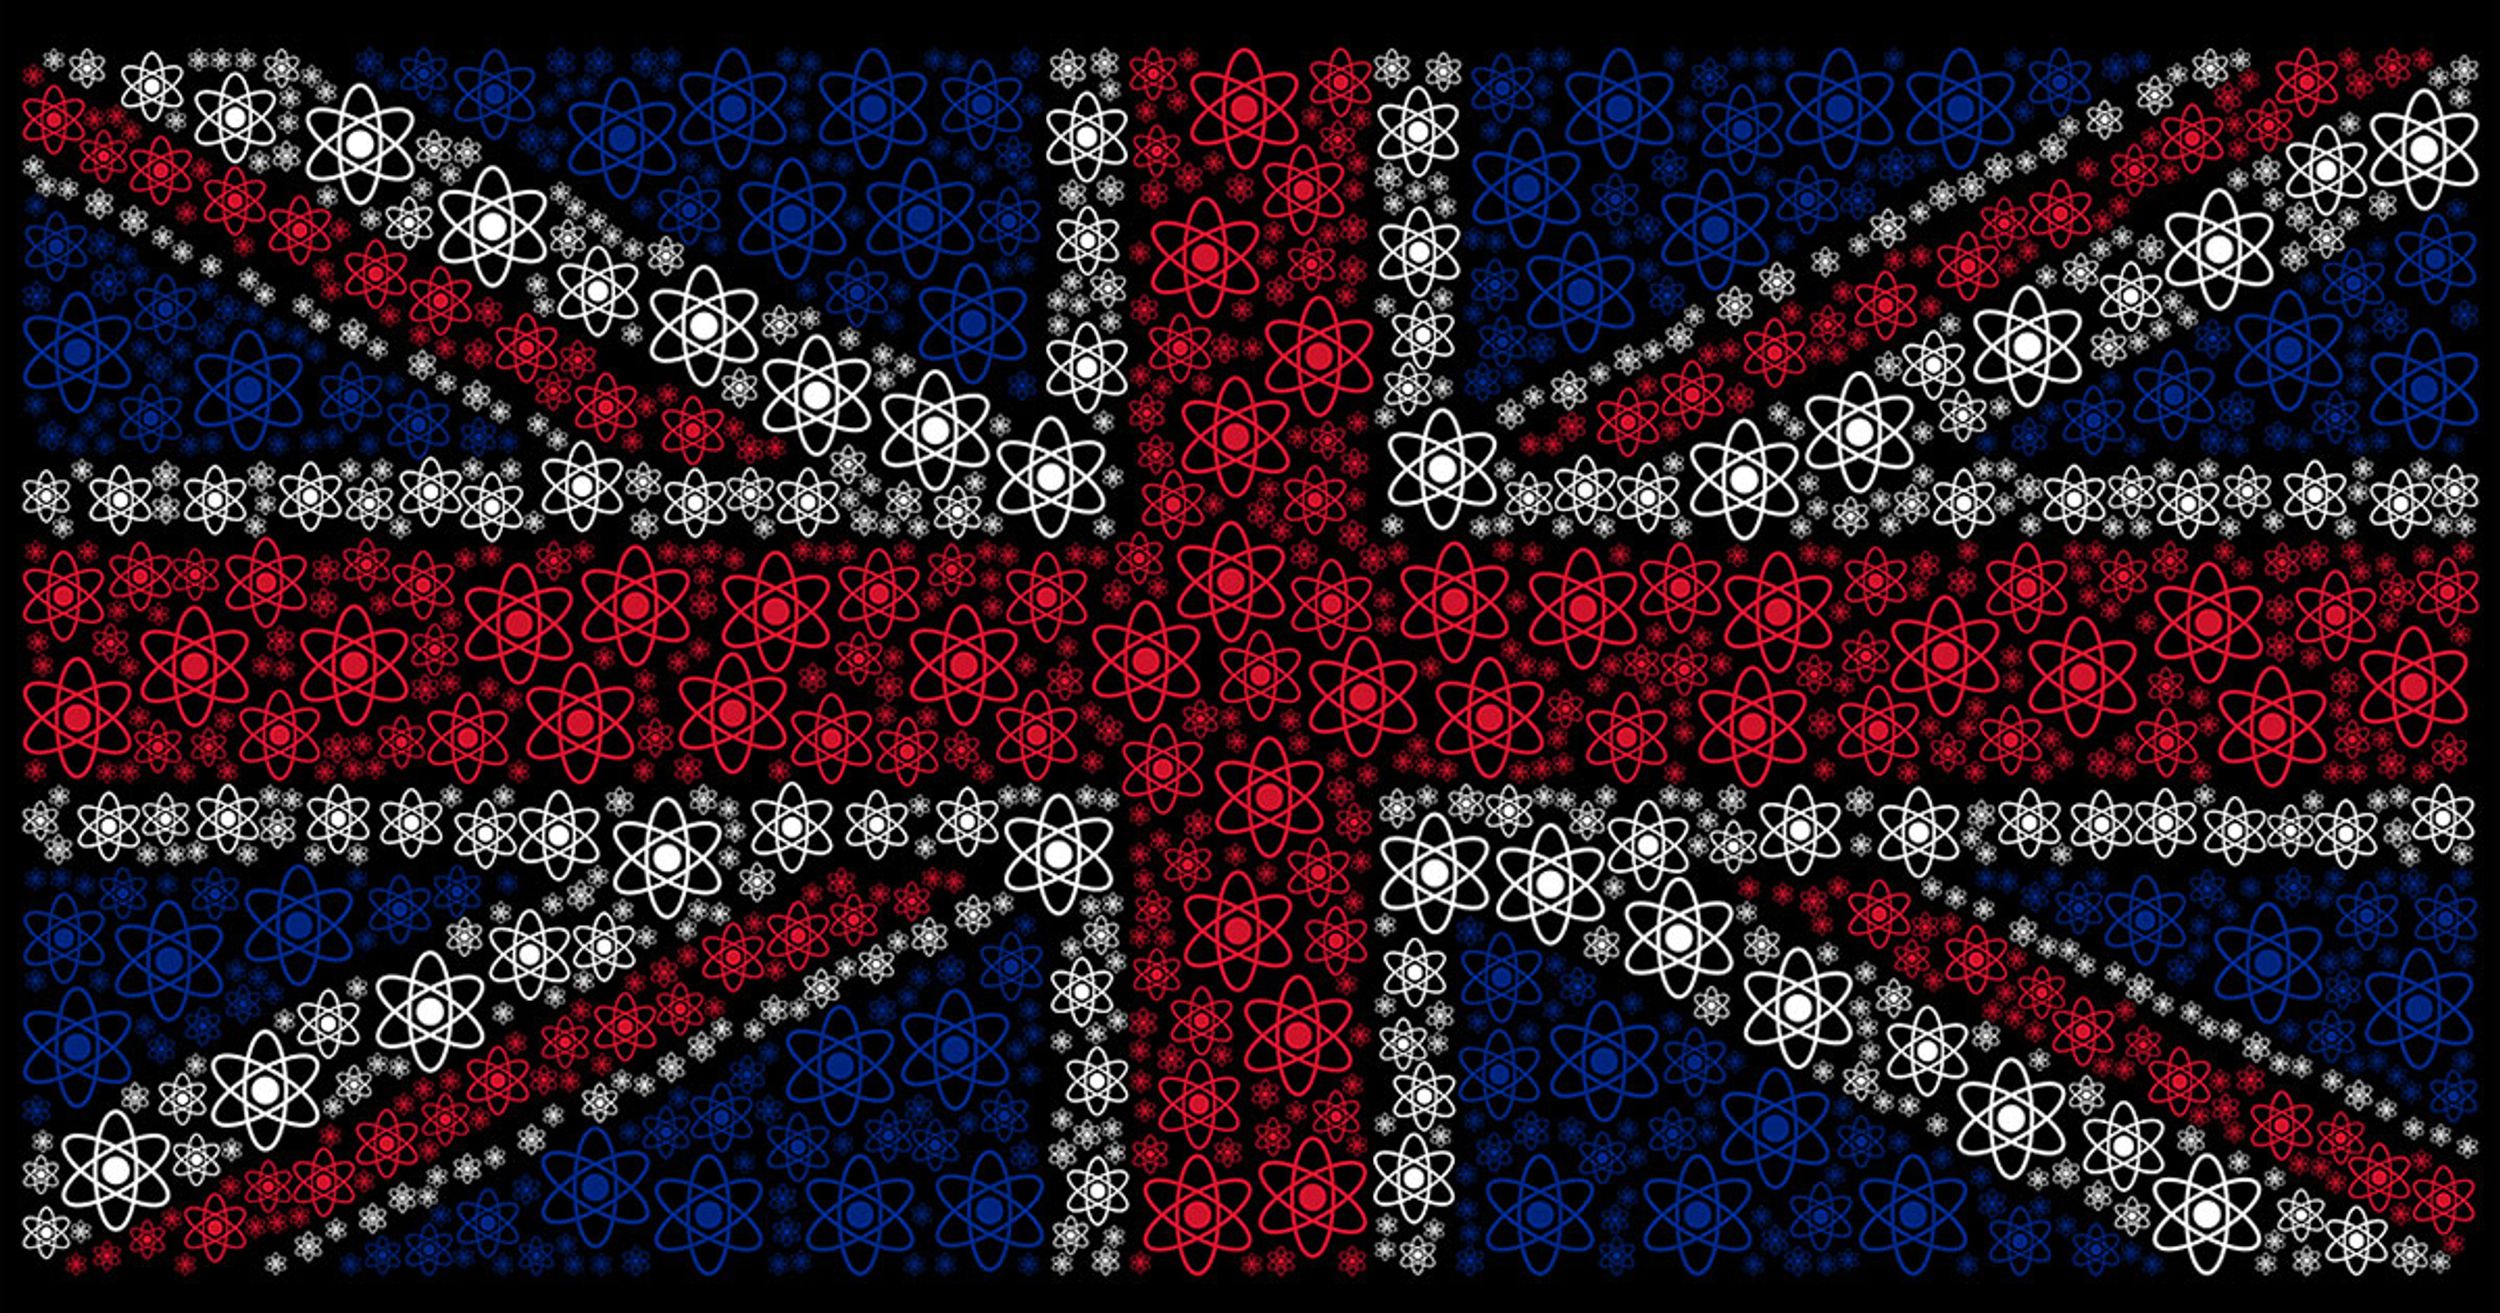 UK flag designed of atom pictograms on a dark background.